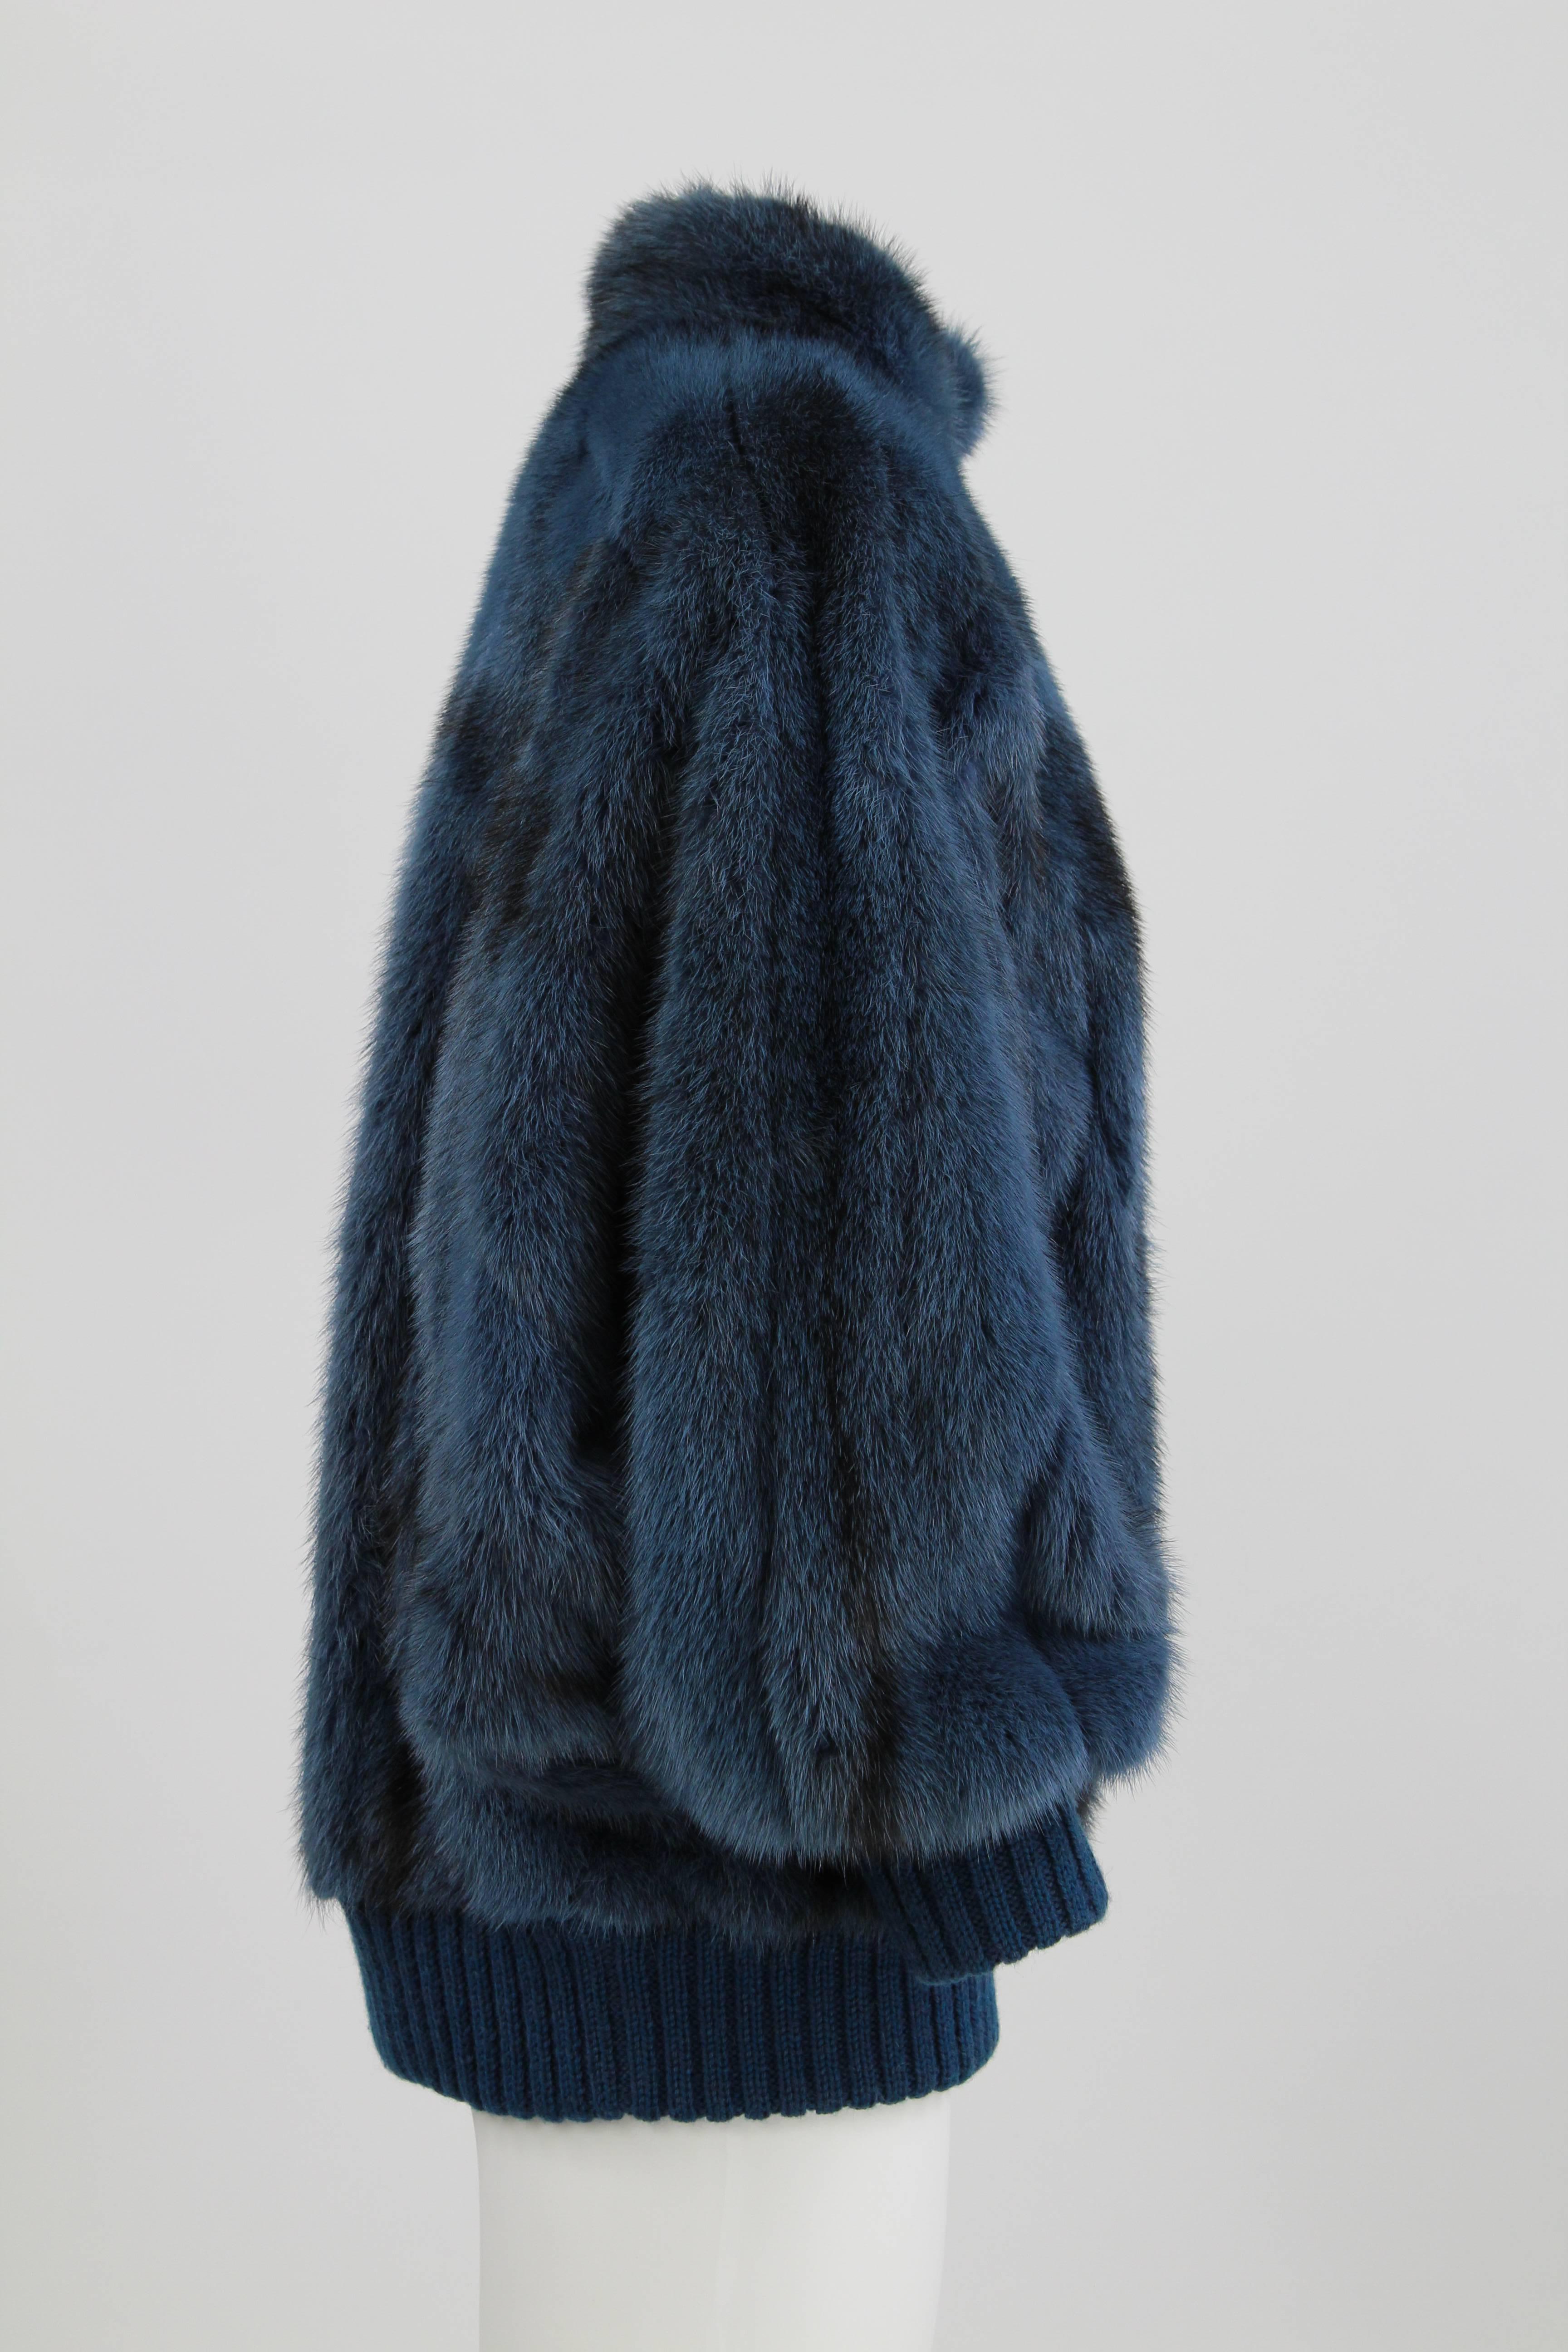 Women's 1980s Christian Dior sporty fur coat